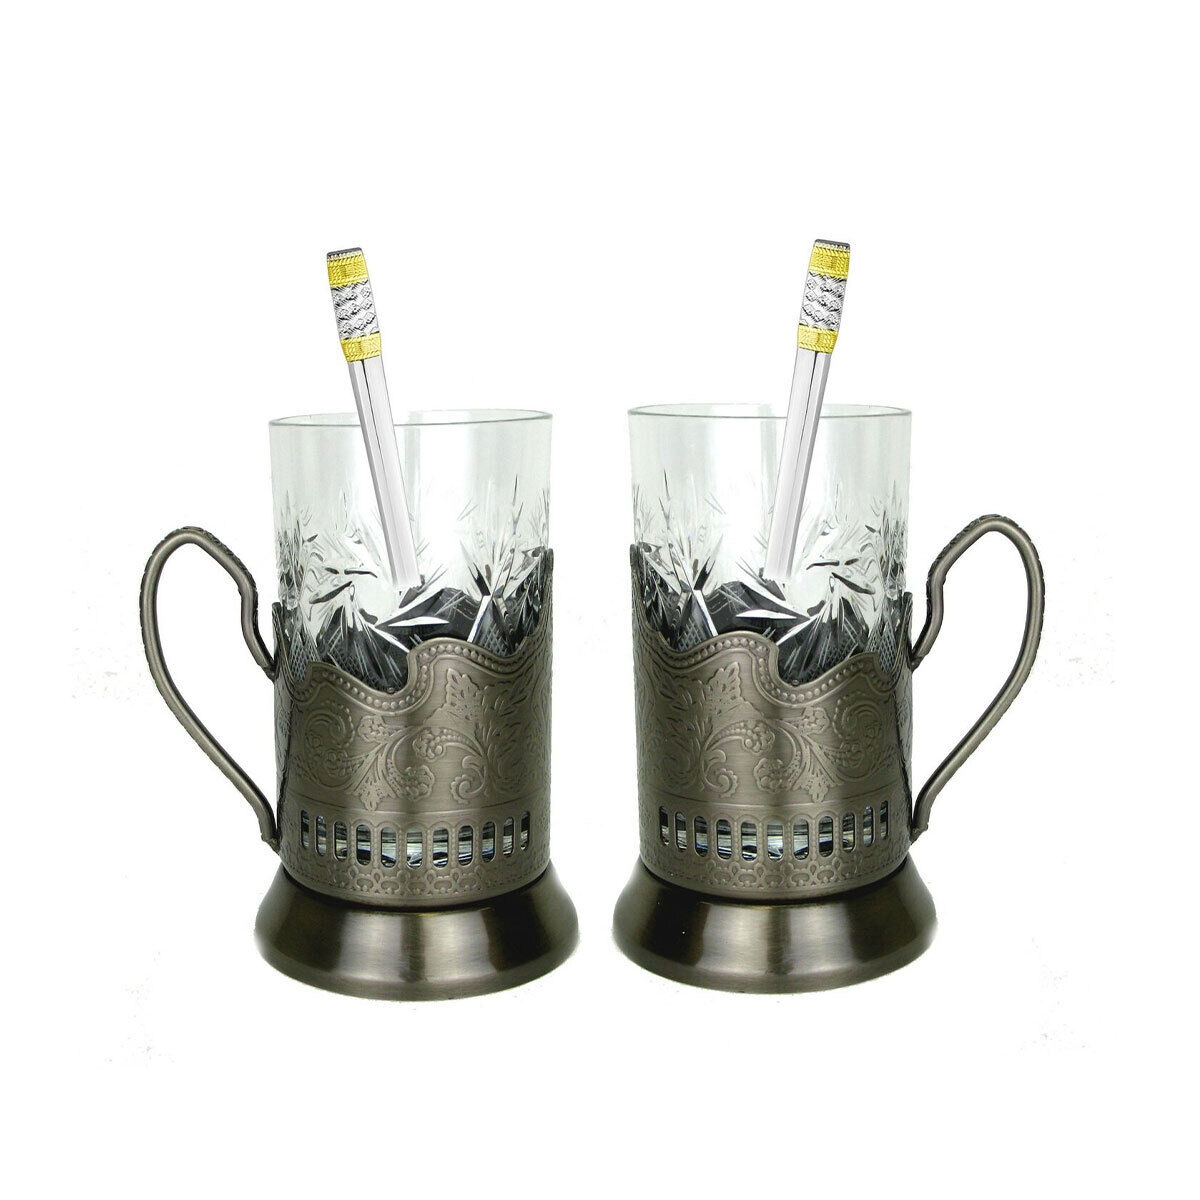 6-pc Set Russian Tea Glass Holders Podstakannik & Cut Crystal Glasses & Spoons